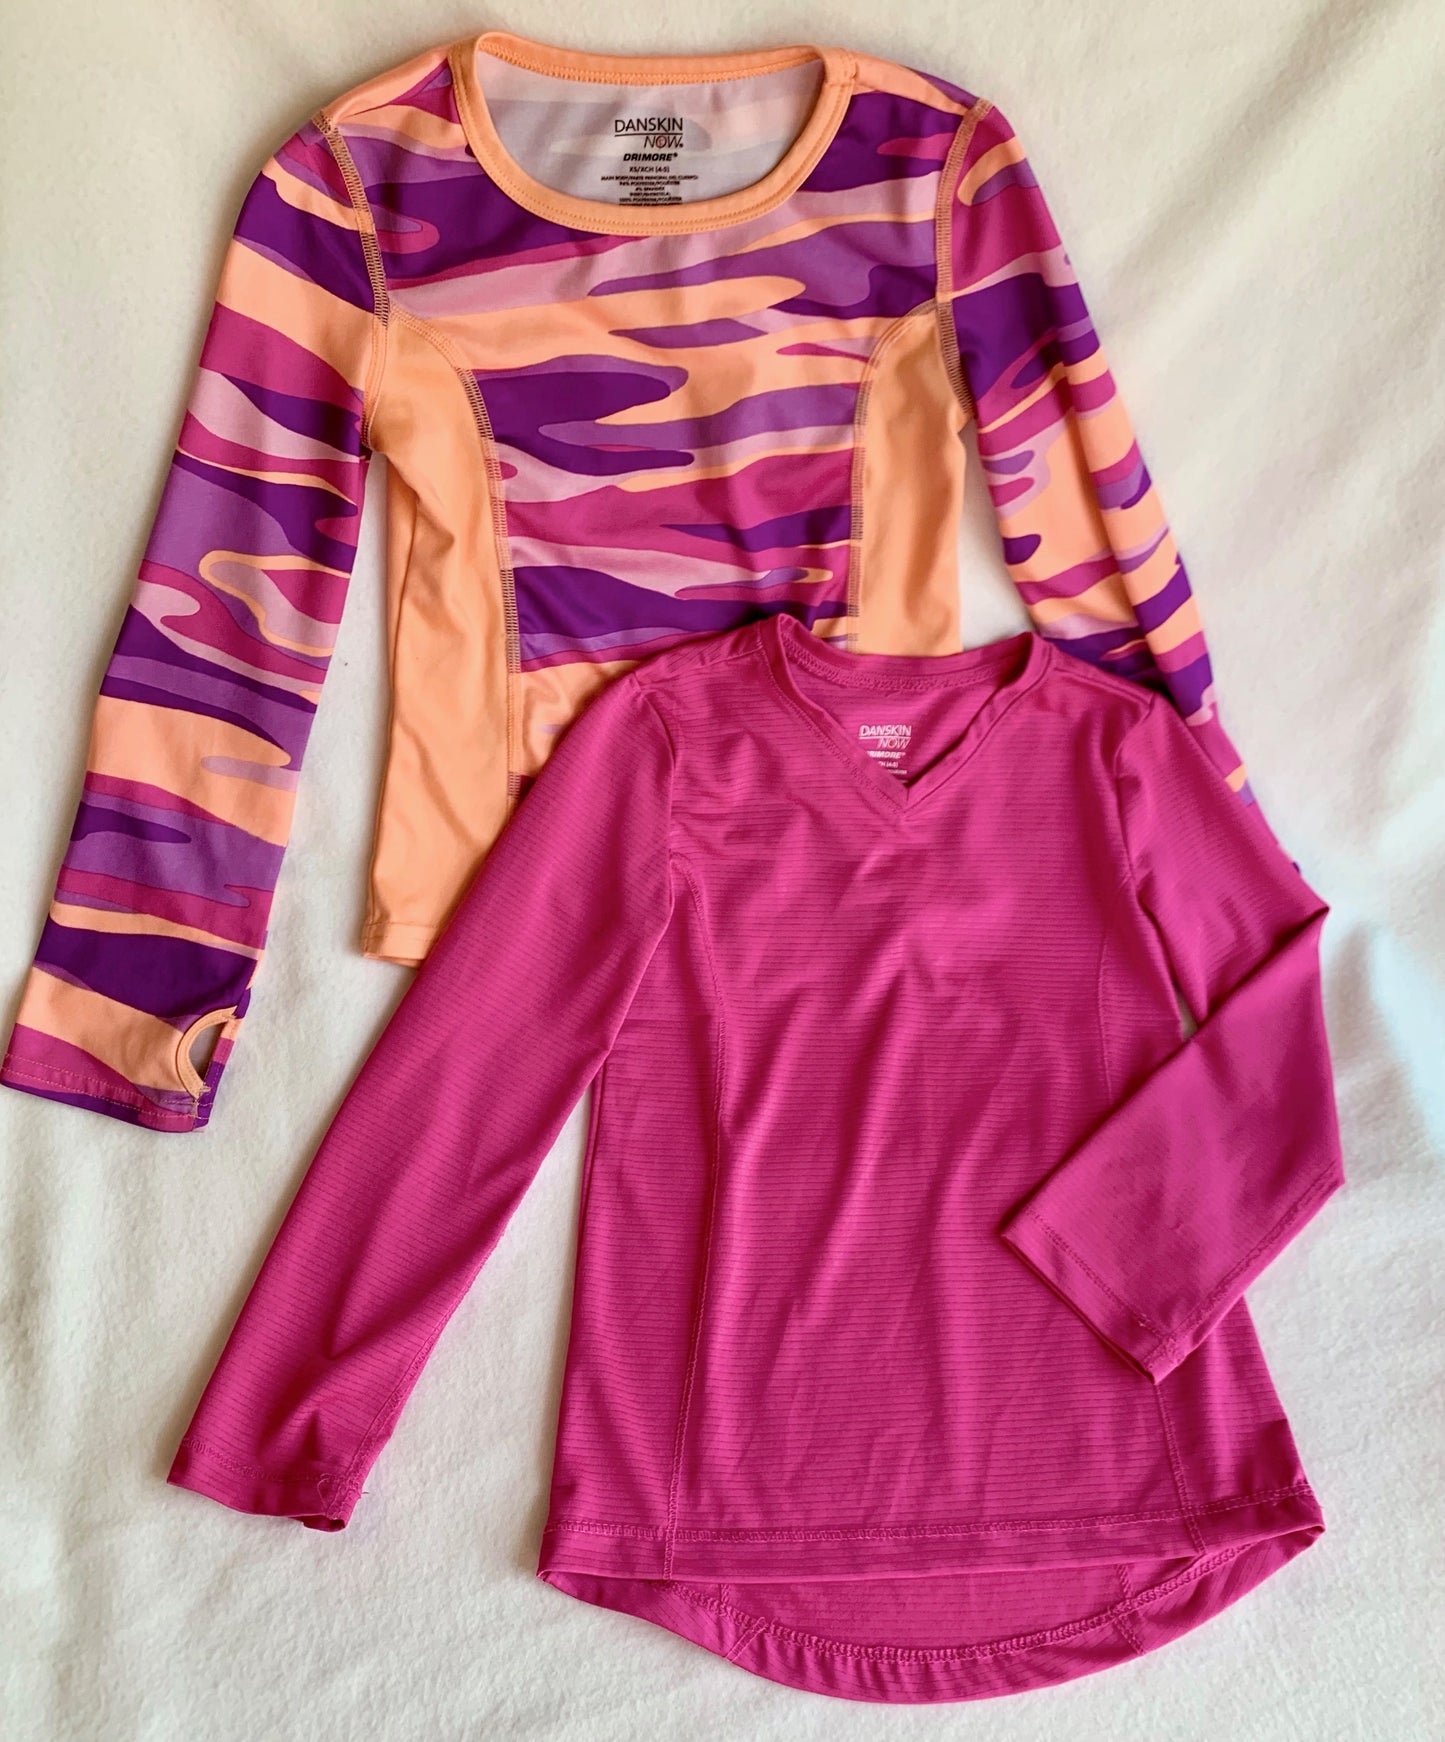 Size 4/5 Danskin Now “Drimore” Girl’s Athletic Shirt Bundle of 2 - Pinks